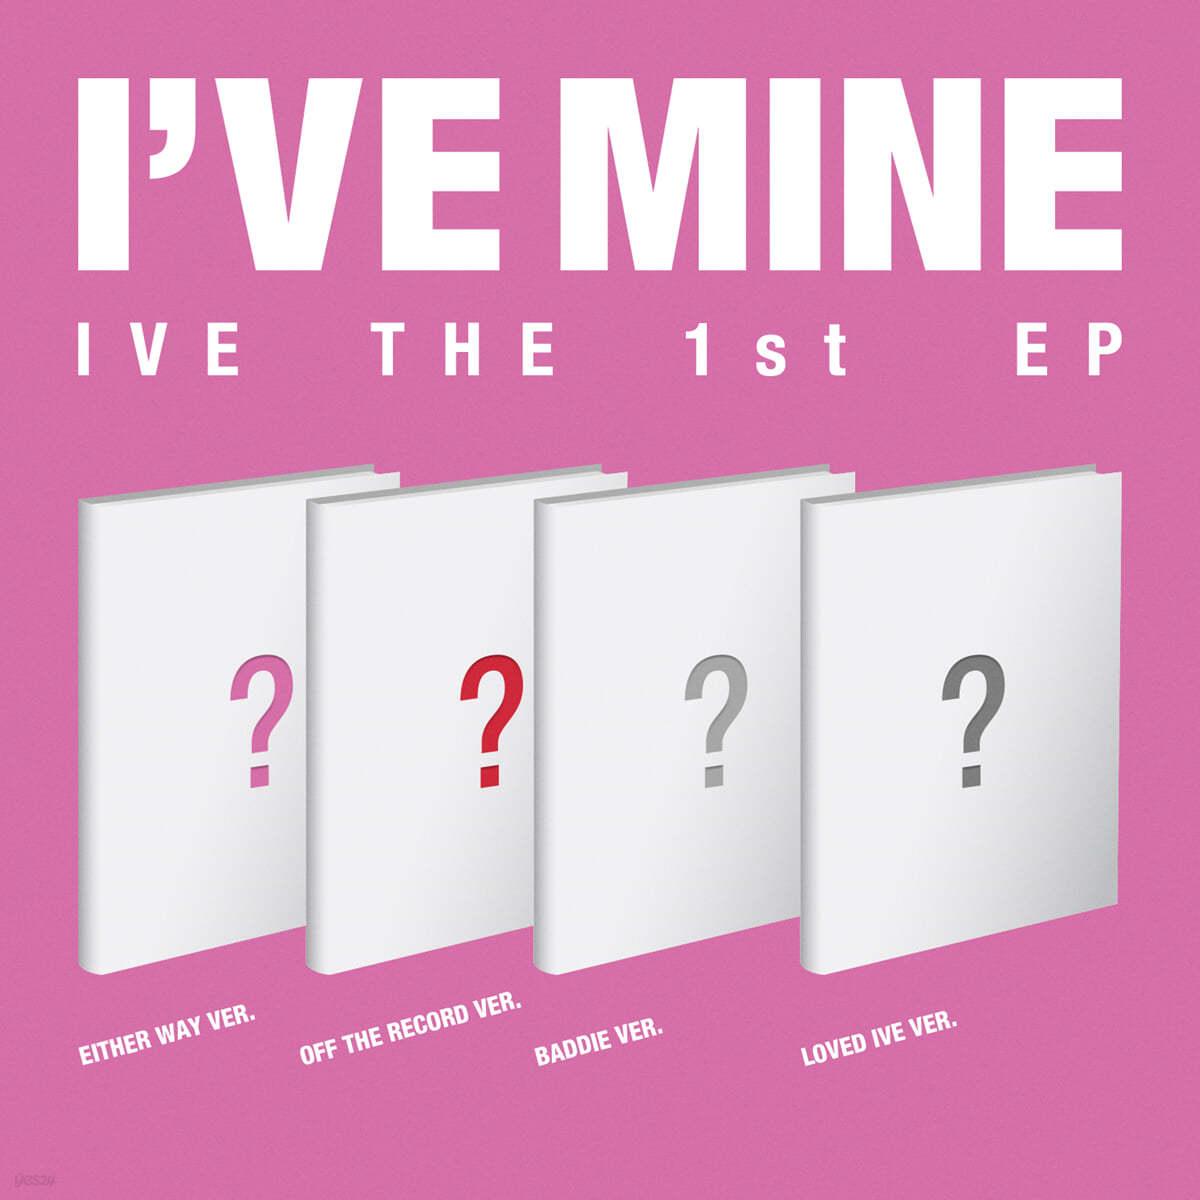 IVE 1st EP – I’VE MINE (Random) + Namil Music Benefit